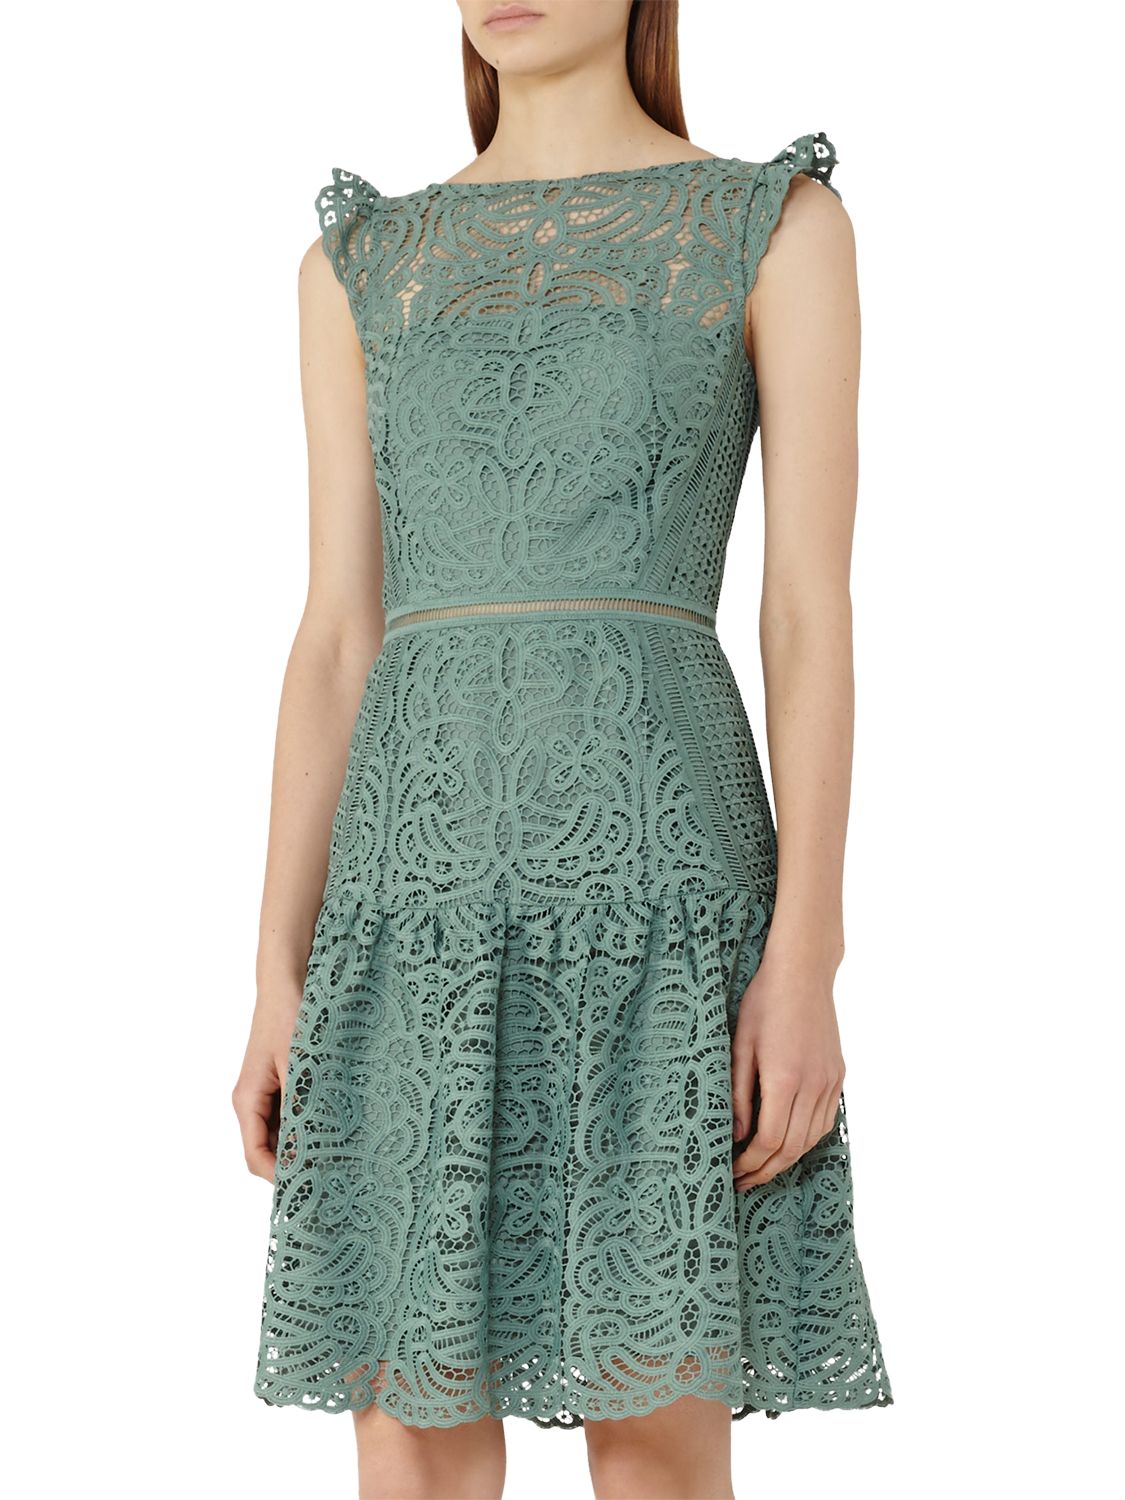 reiss green lace dress